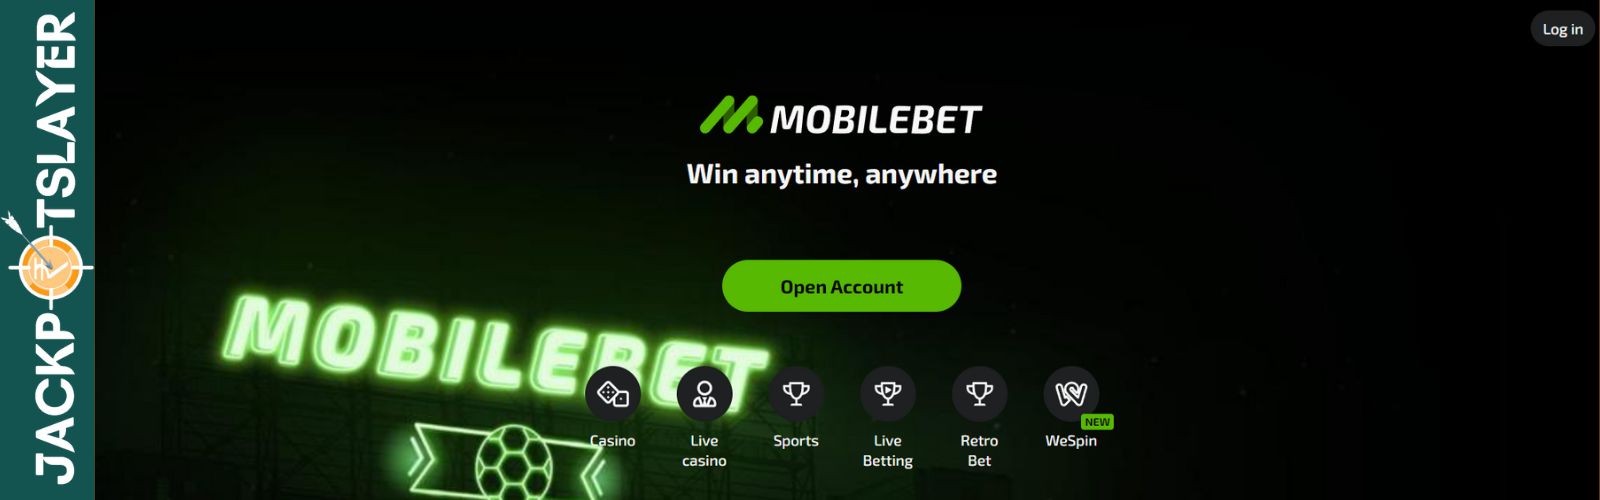 Mobilebet Online casino Review